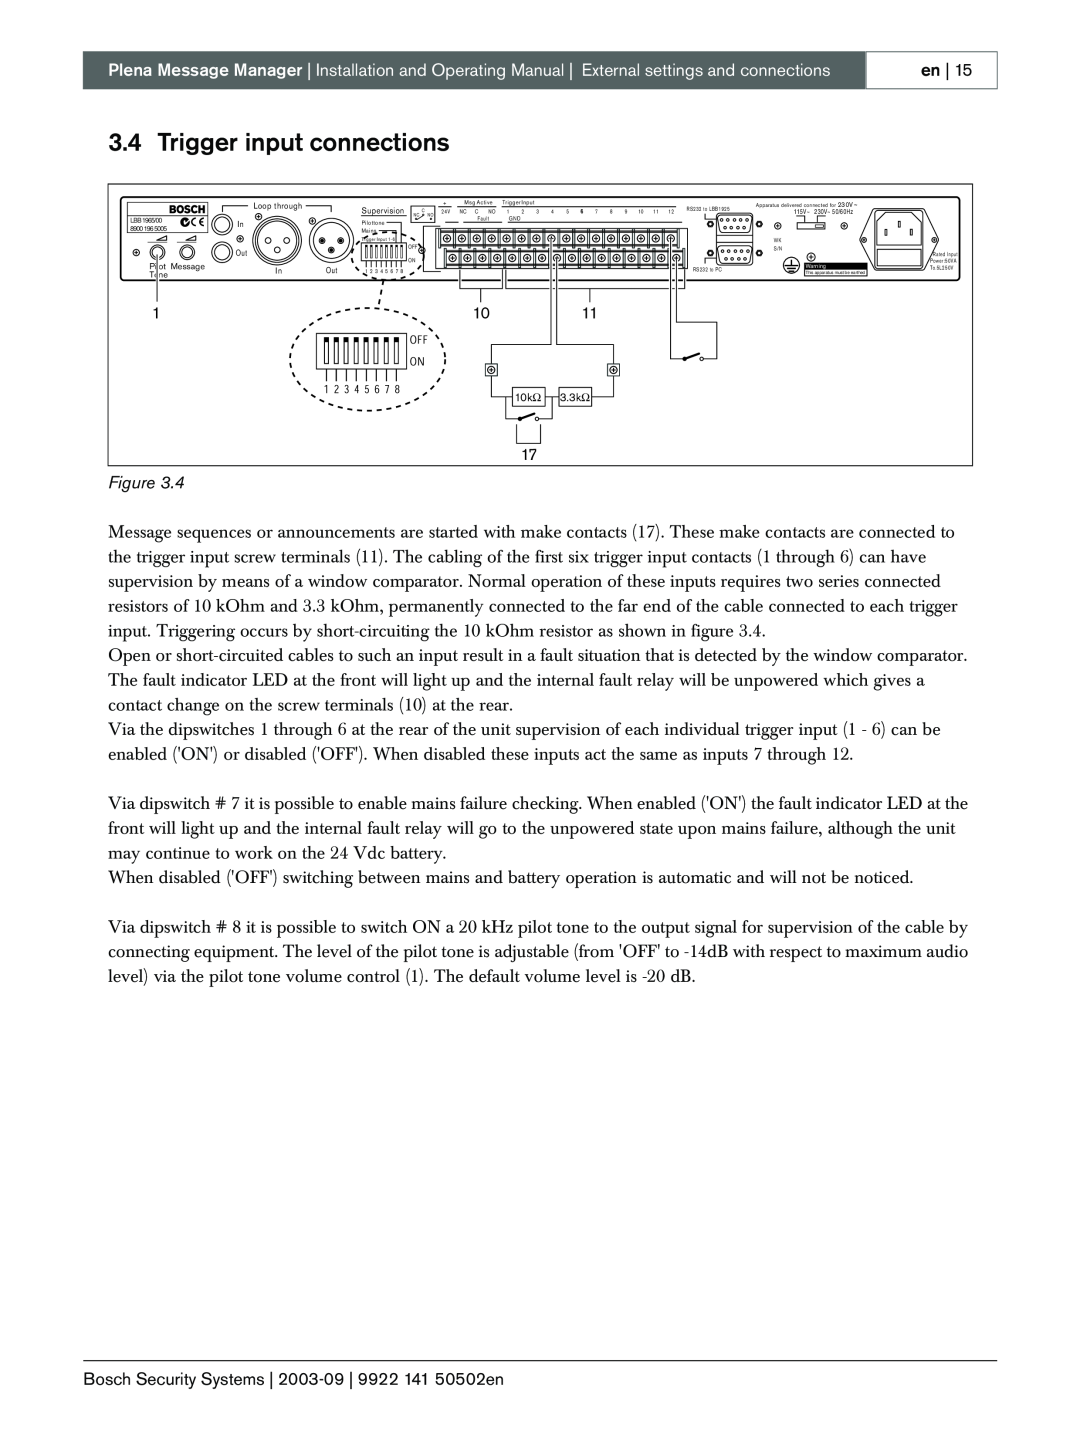 Bosch Appliances LBB 1965 manual Trigger input connections, 10kΩ, 3.3kΩ 